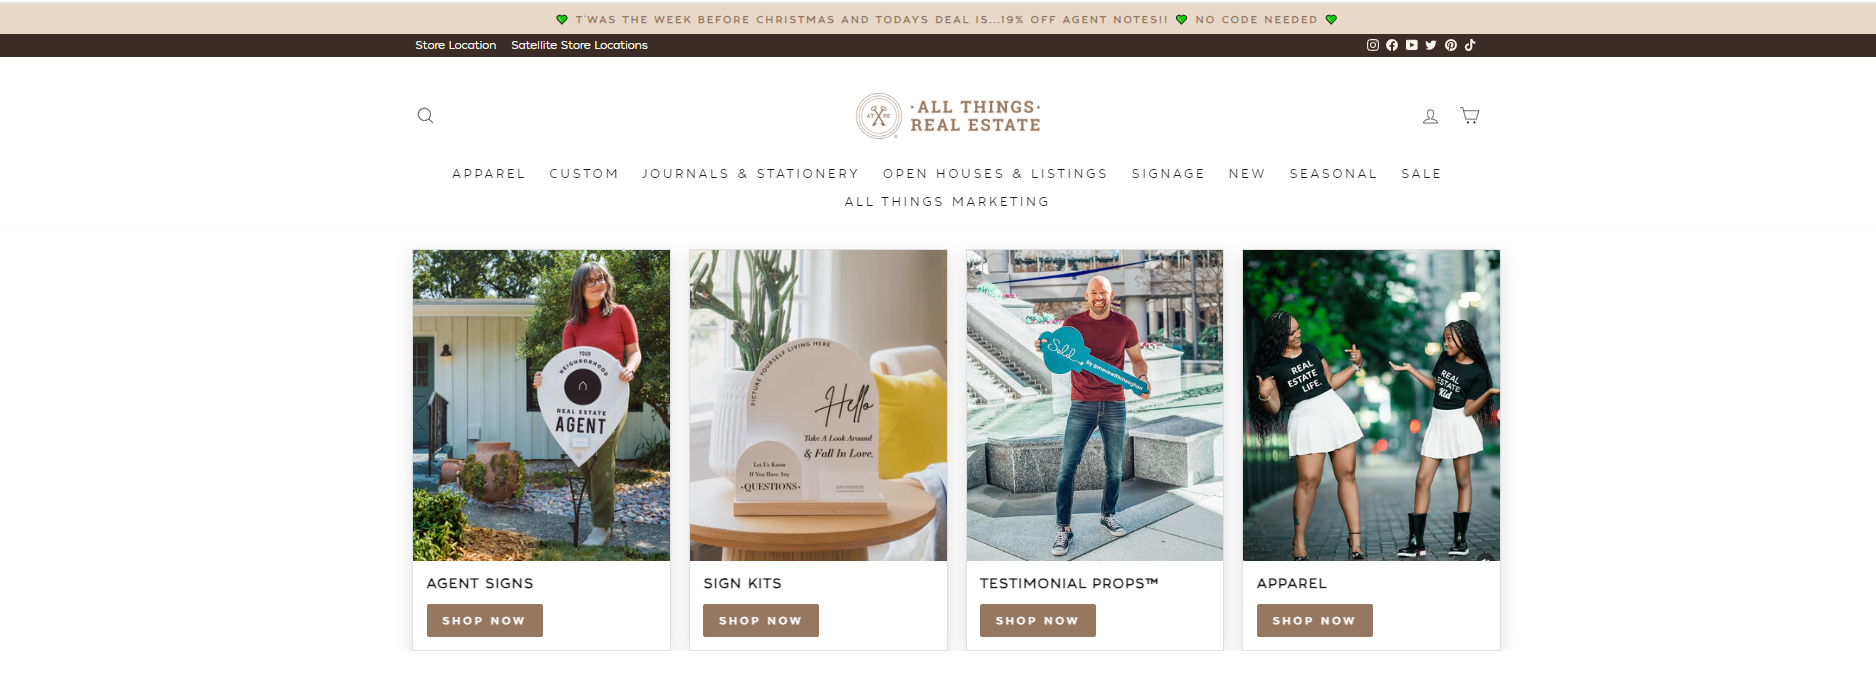 real estate affiliate marketing - allthingsrealestate homepage screenshot
